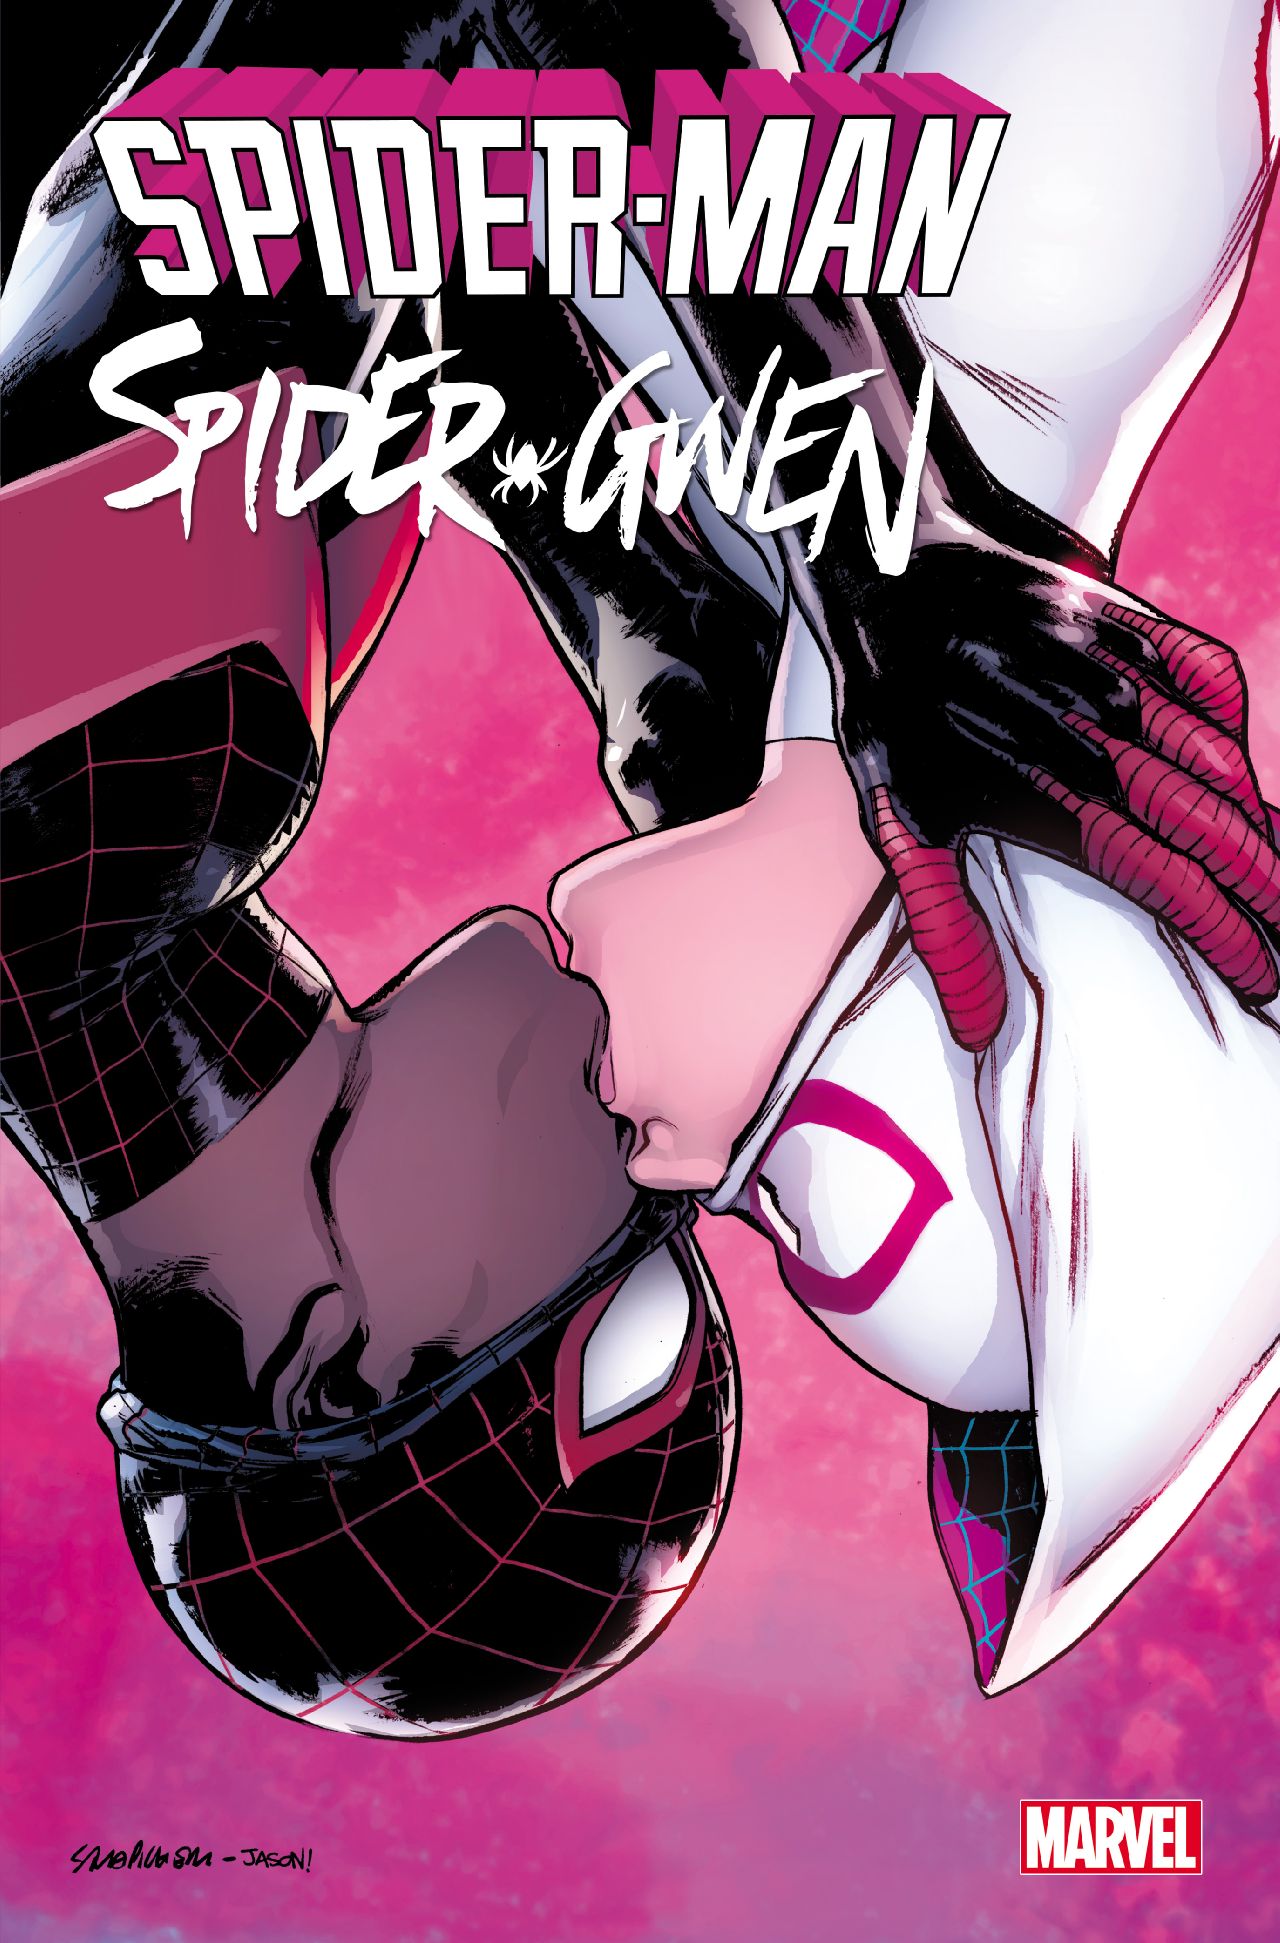 Spider-Man/Spider-Gwen: Sitting in a Tree Review